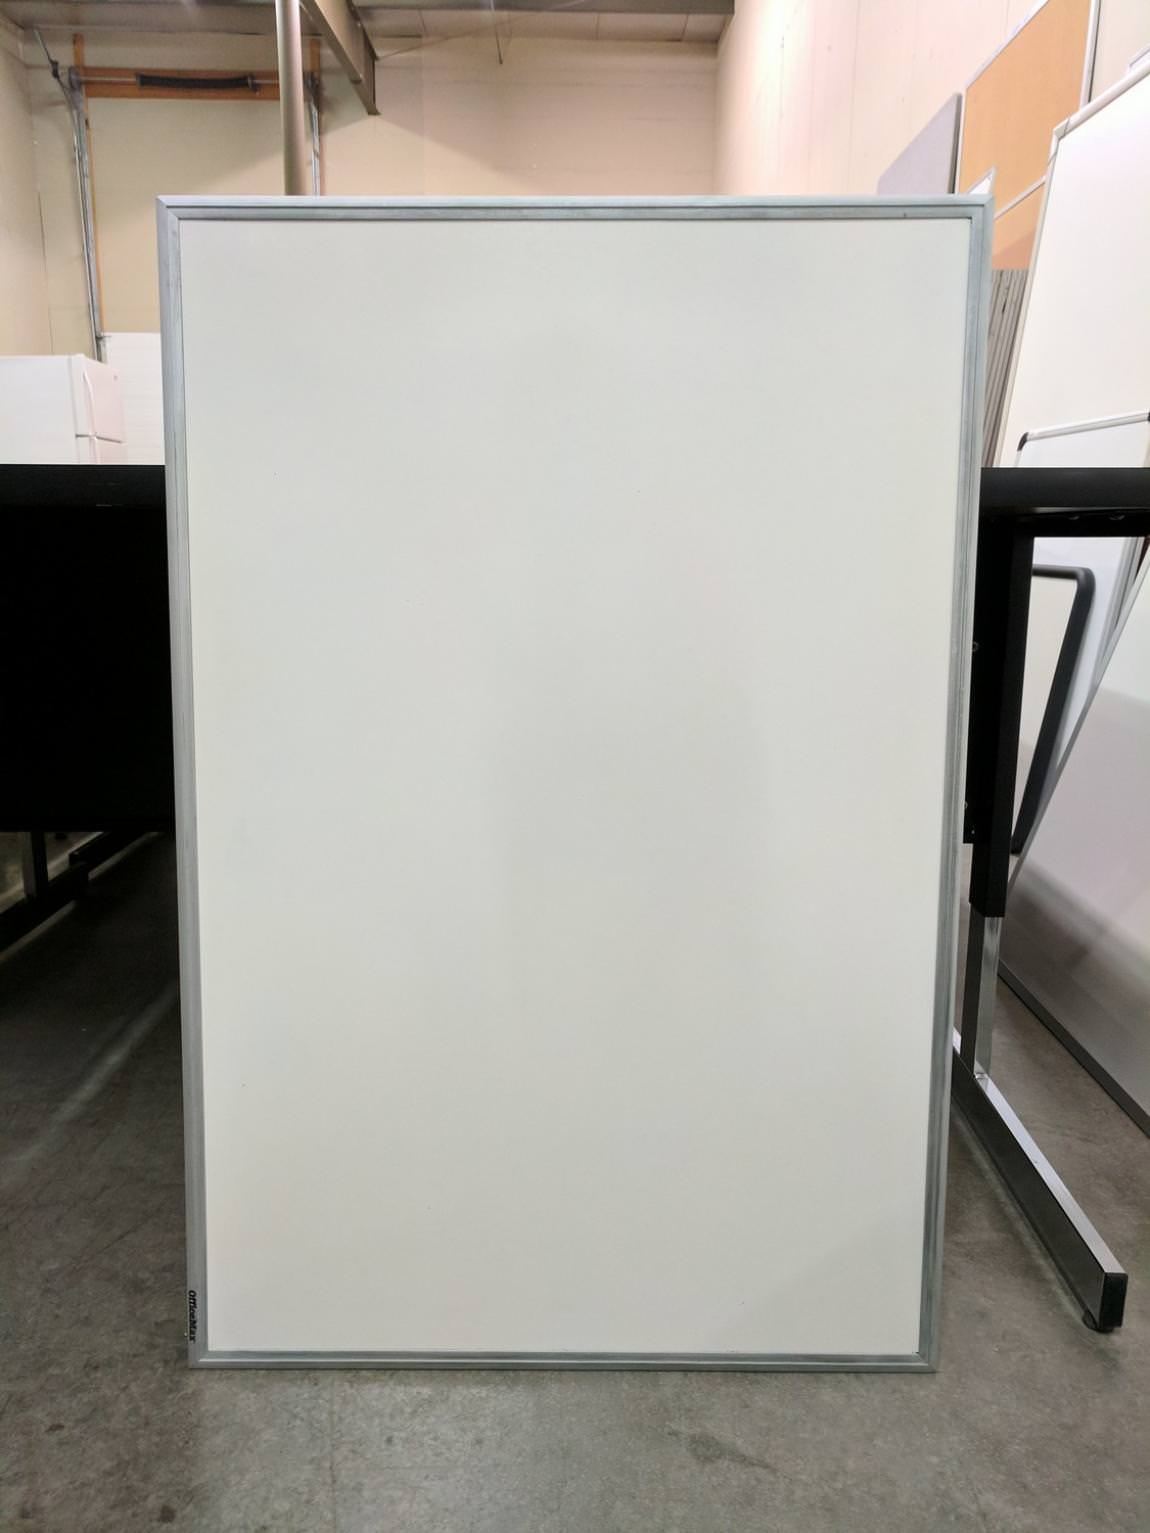 36x24 Non-Magnetic Dry Erase Whiteboard